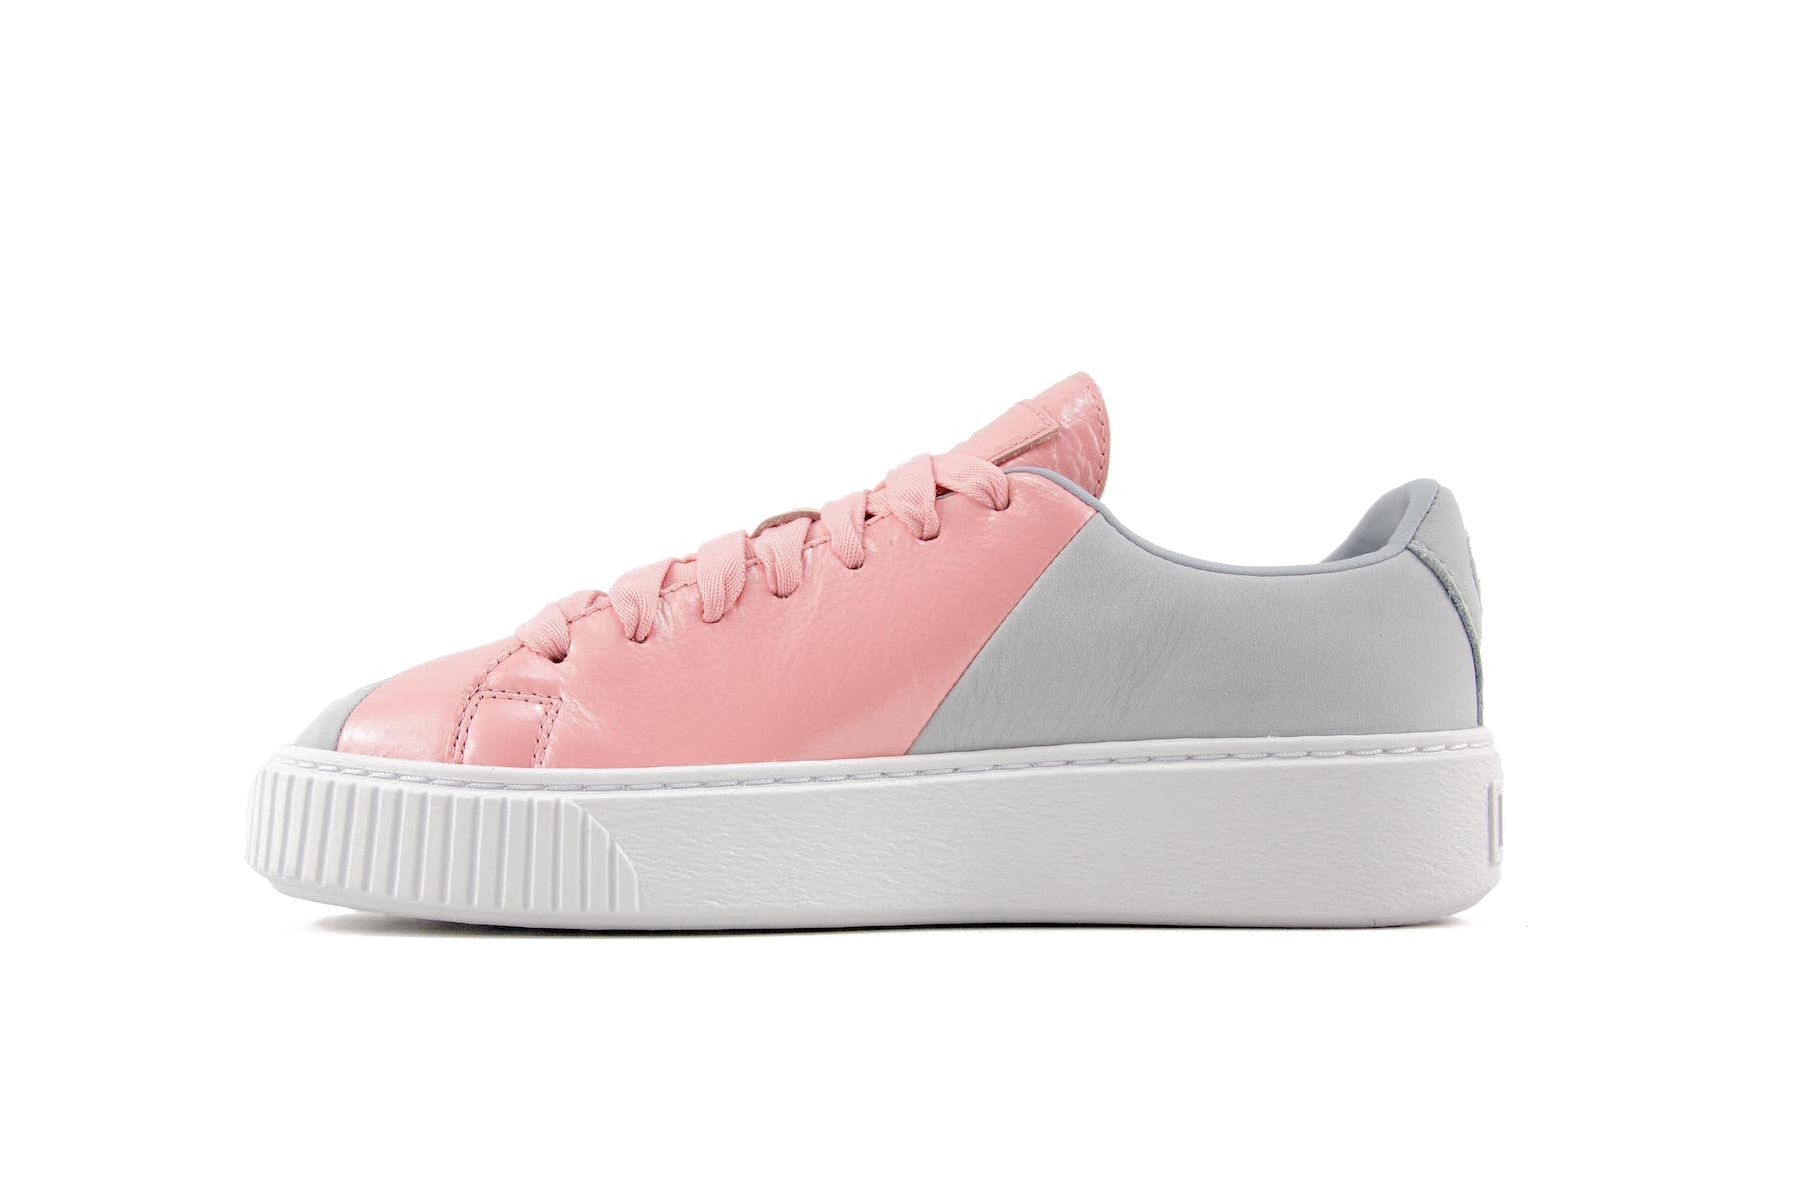 PUMA Basket Platform Valentine's Day Colorway Pink Grey Heart Sneaker Silhouette